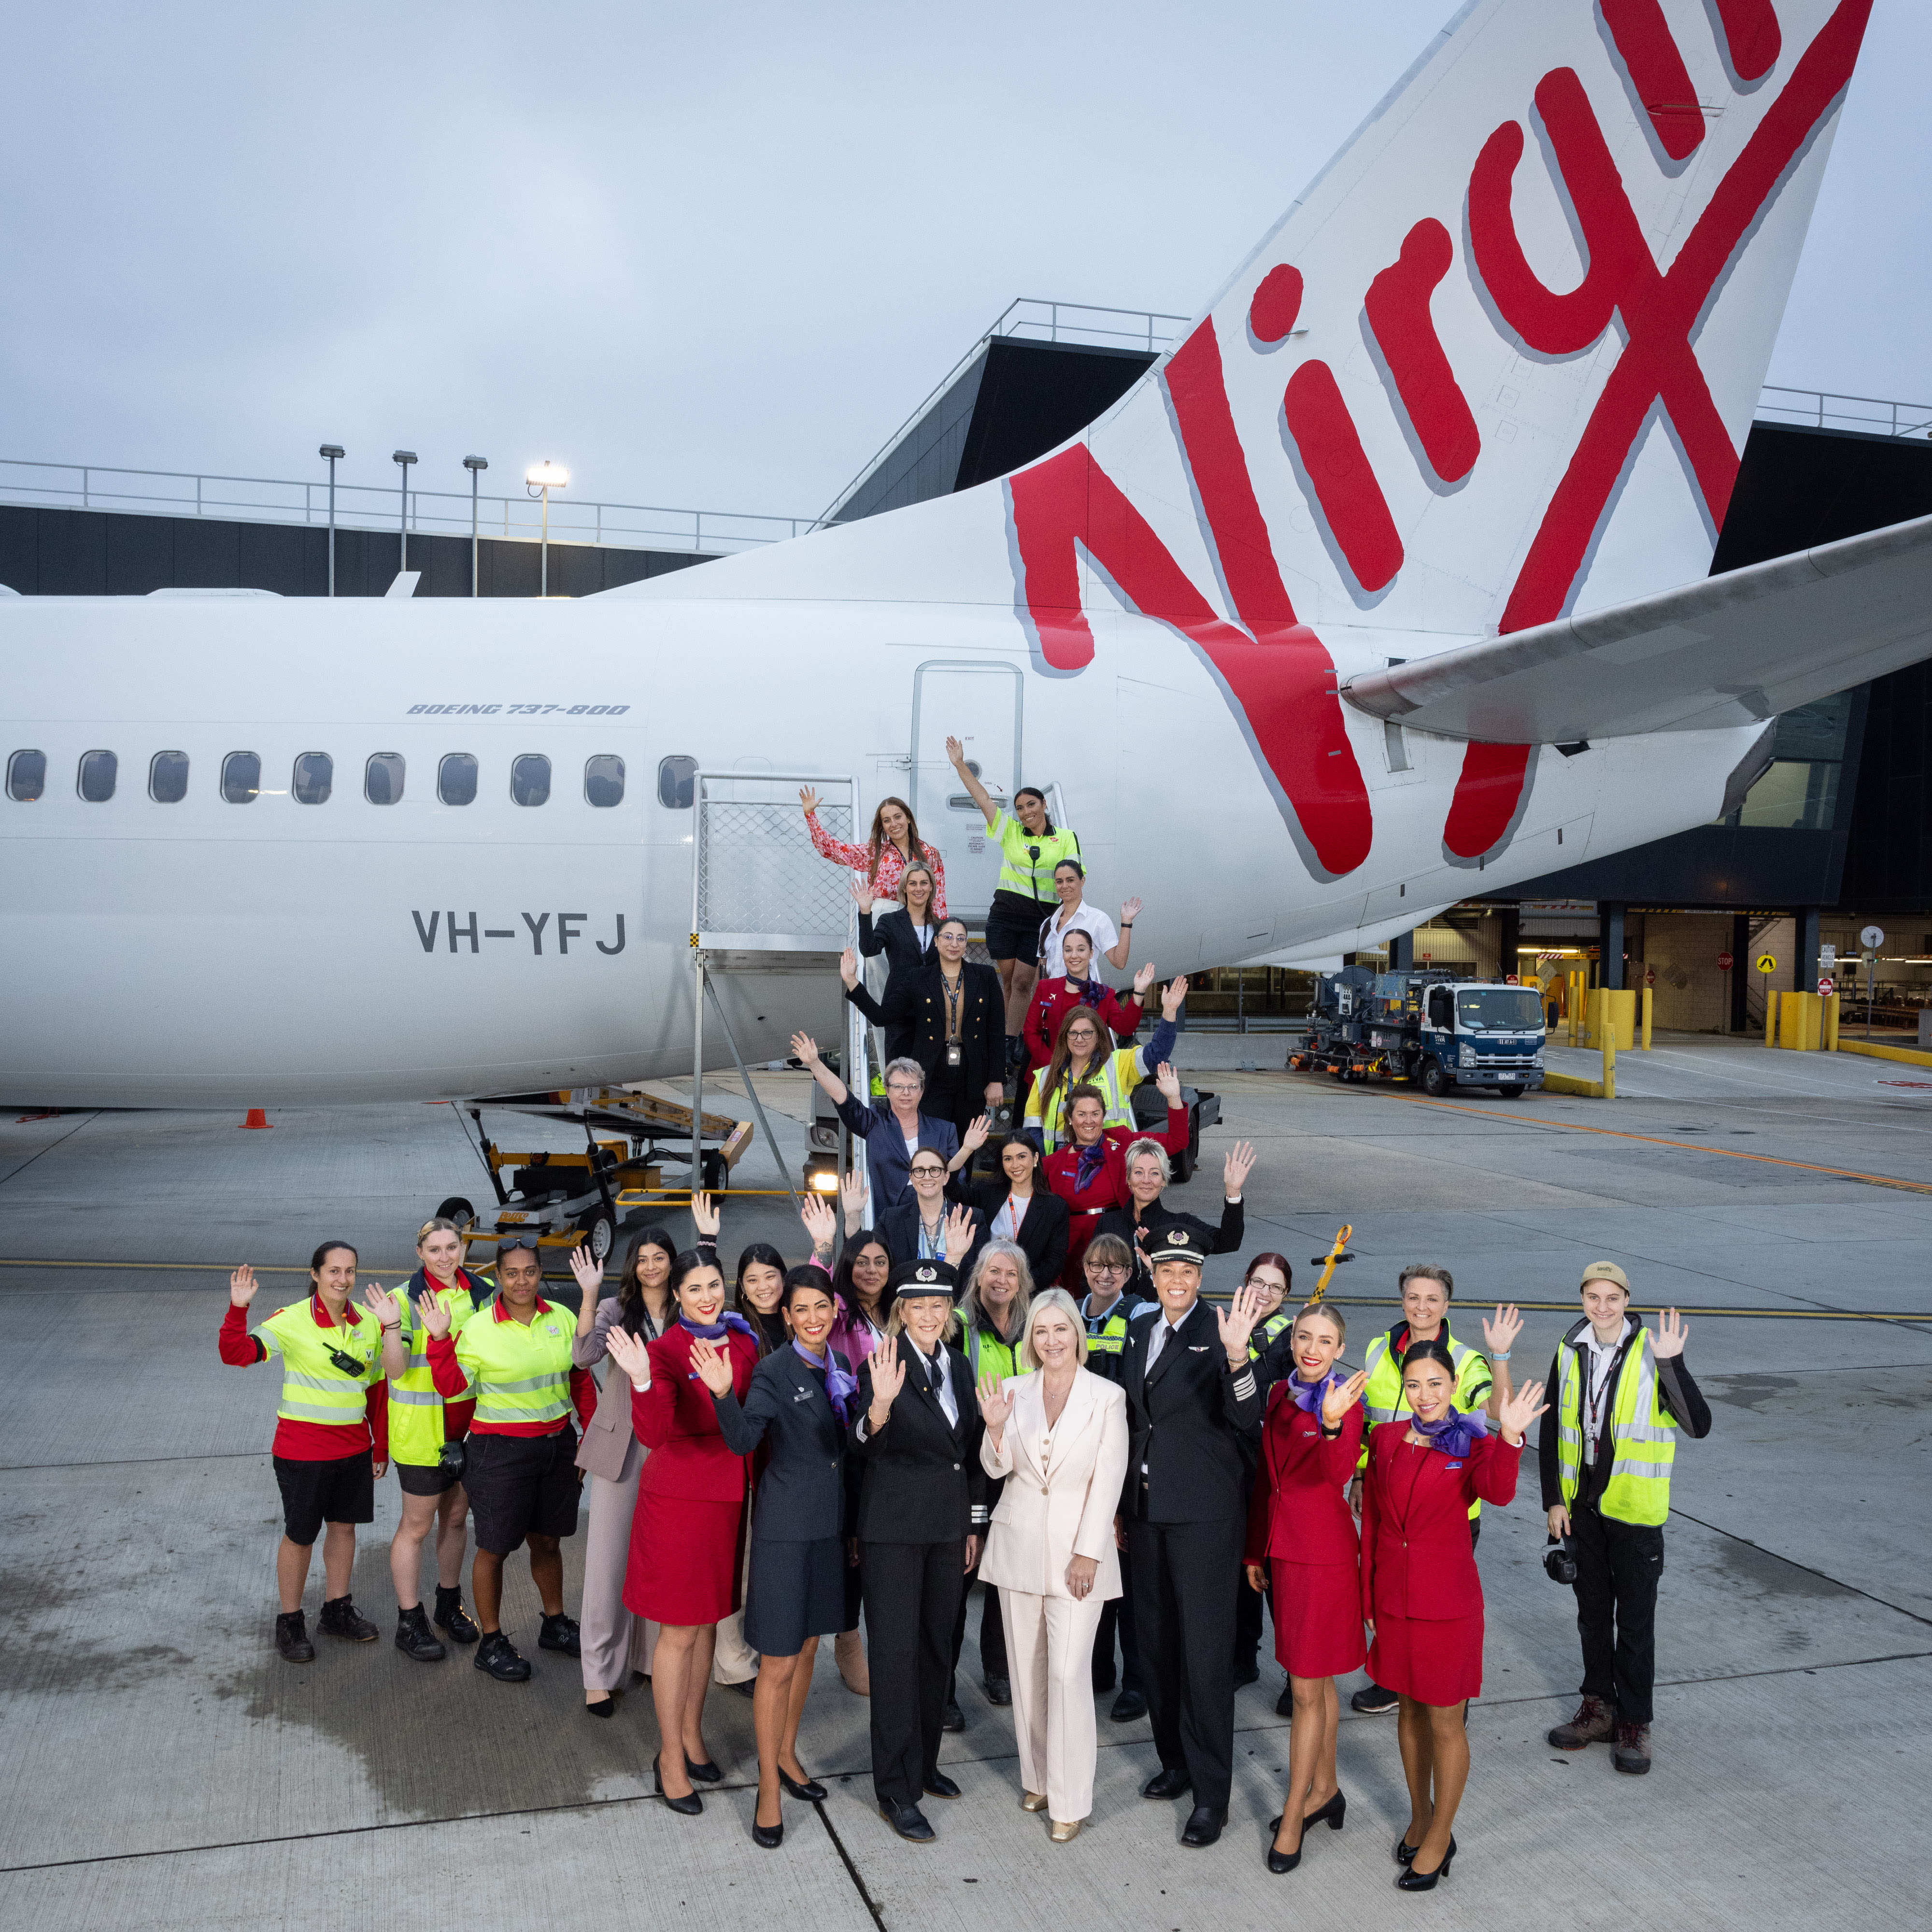 The team of people involved in Virgin Australia's International Womens Day flight